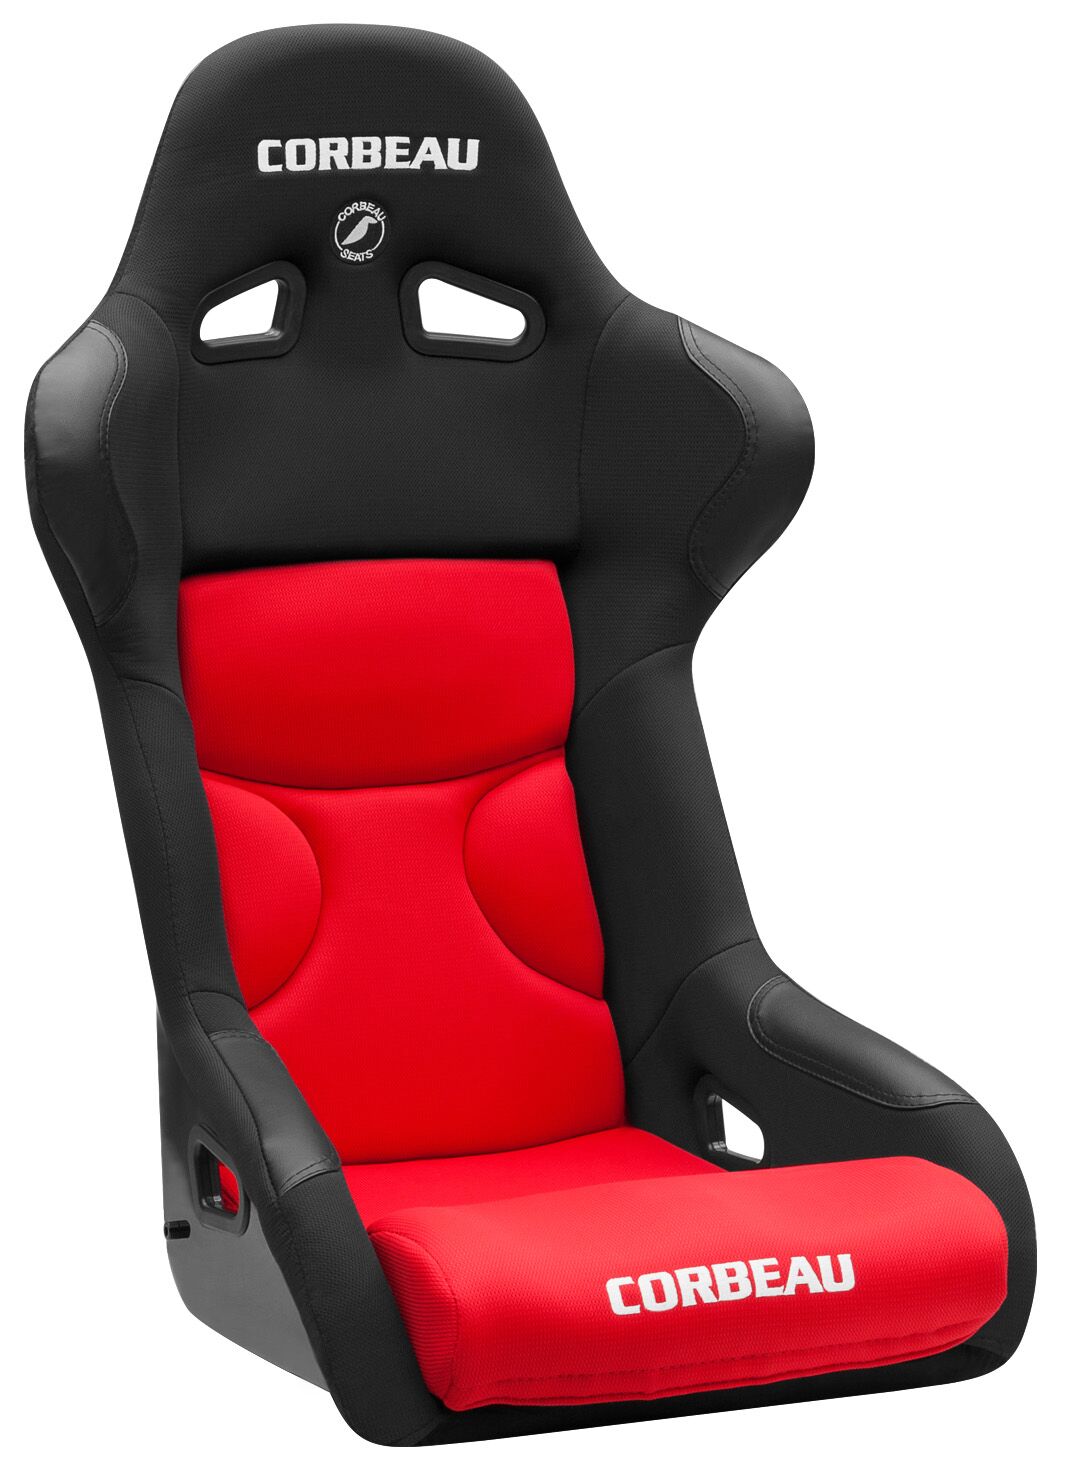 Corbeau FX1 Seats - Black/Red Cloth